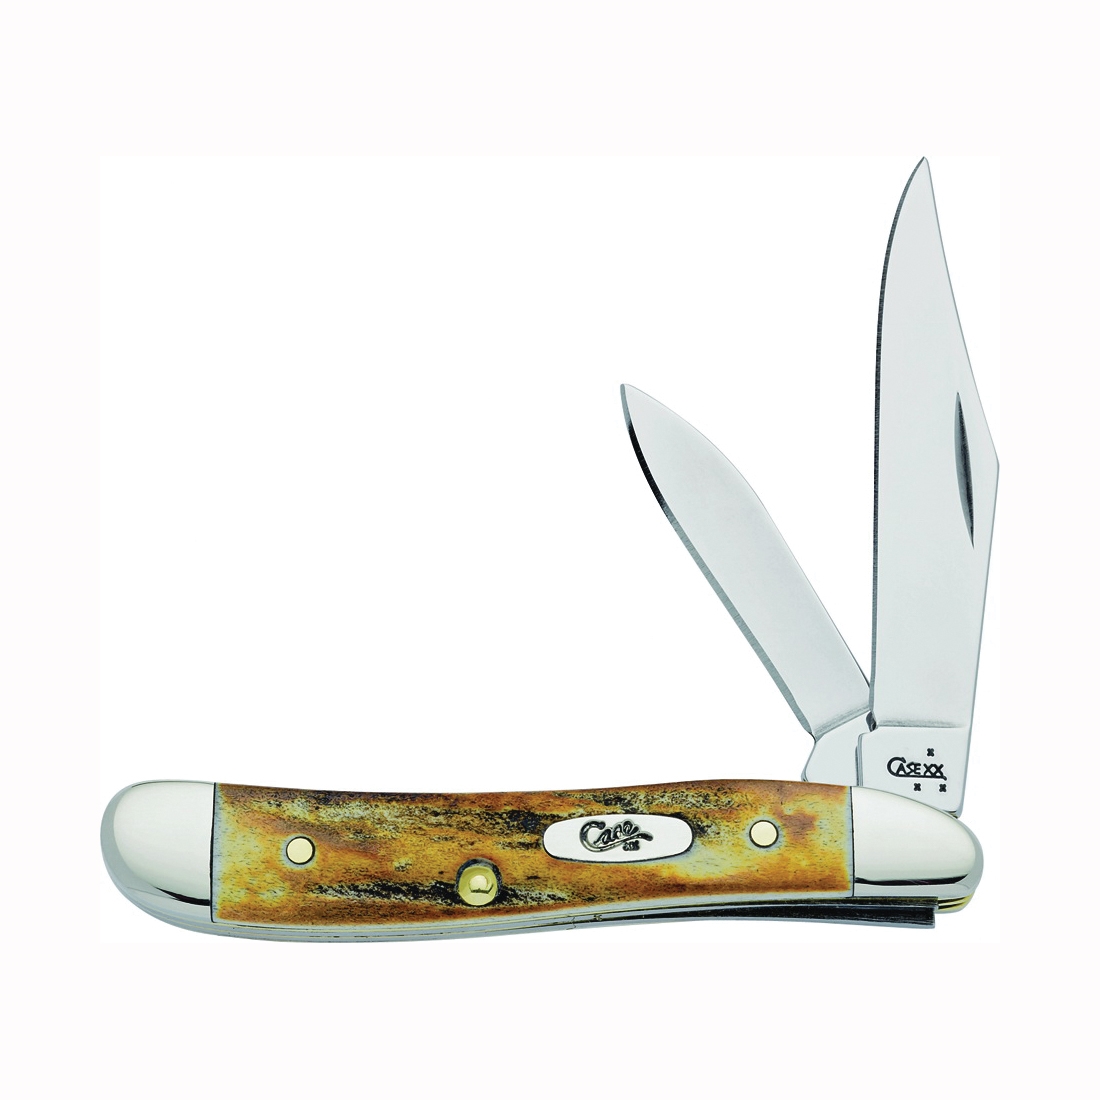 CASE 048 Pocket Knife, 5220 Stainless Steel Blade, 2-Blade